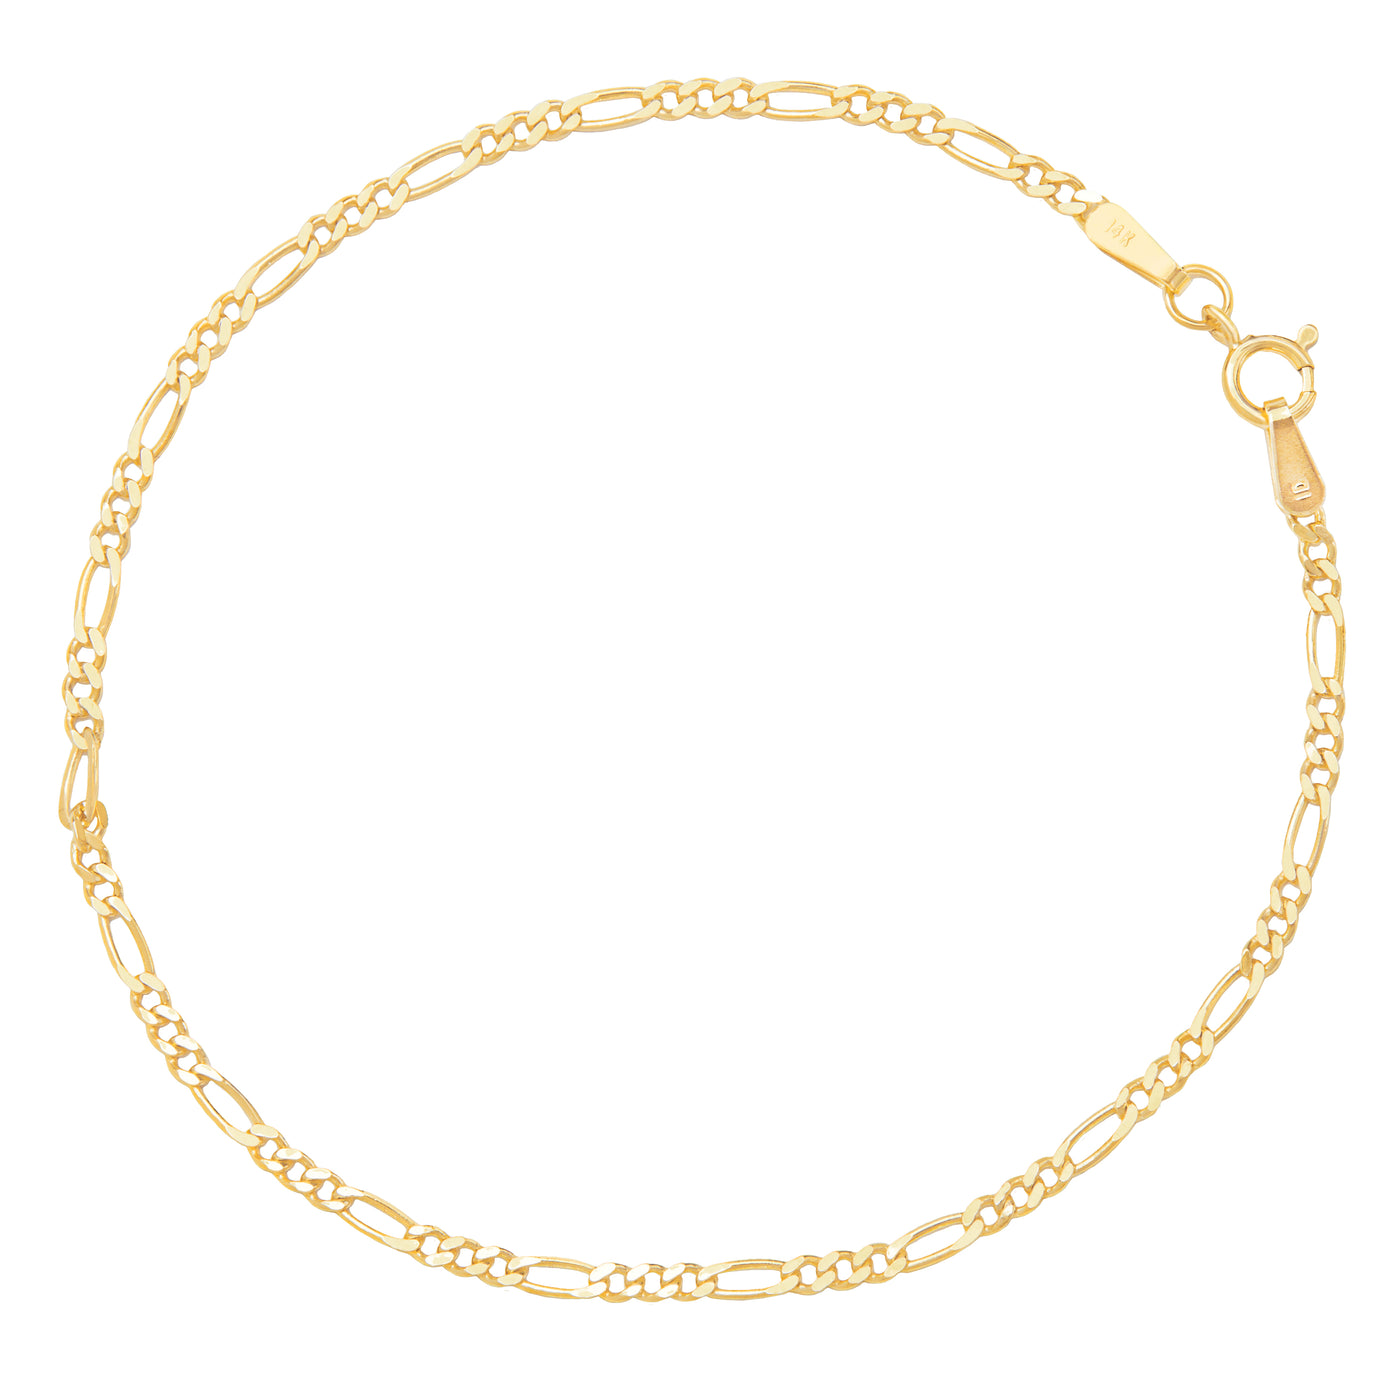 14 Karat Yellow Gold Figaro Chain Bracelet on White Background